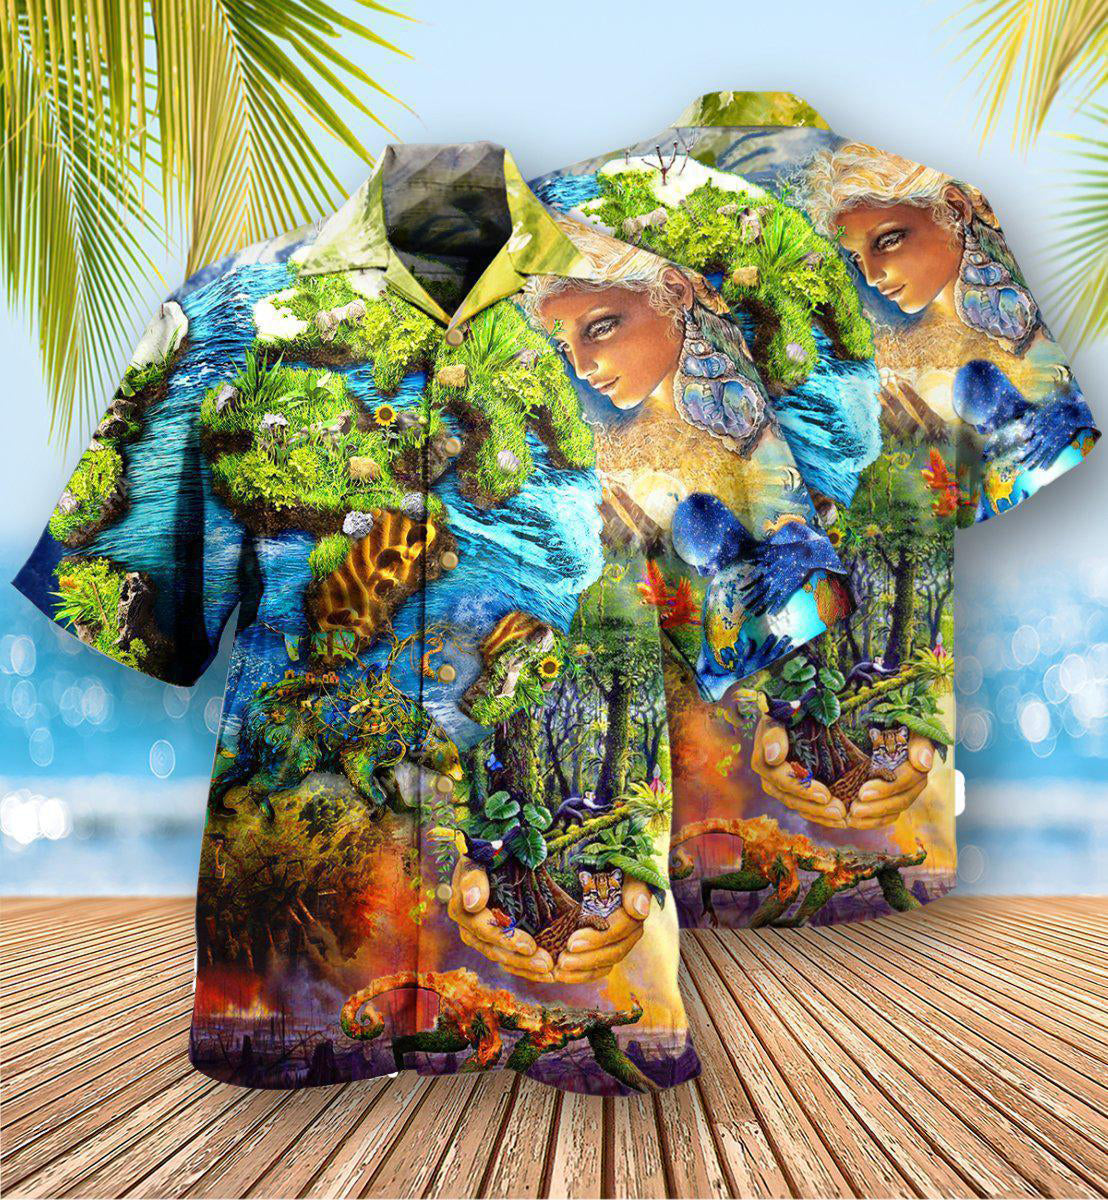 Earth With Environmental Protection - Hawaiian Shirt - Owls Matrix LTD